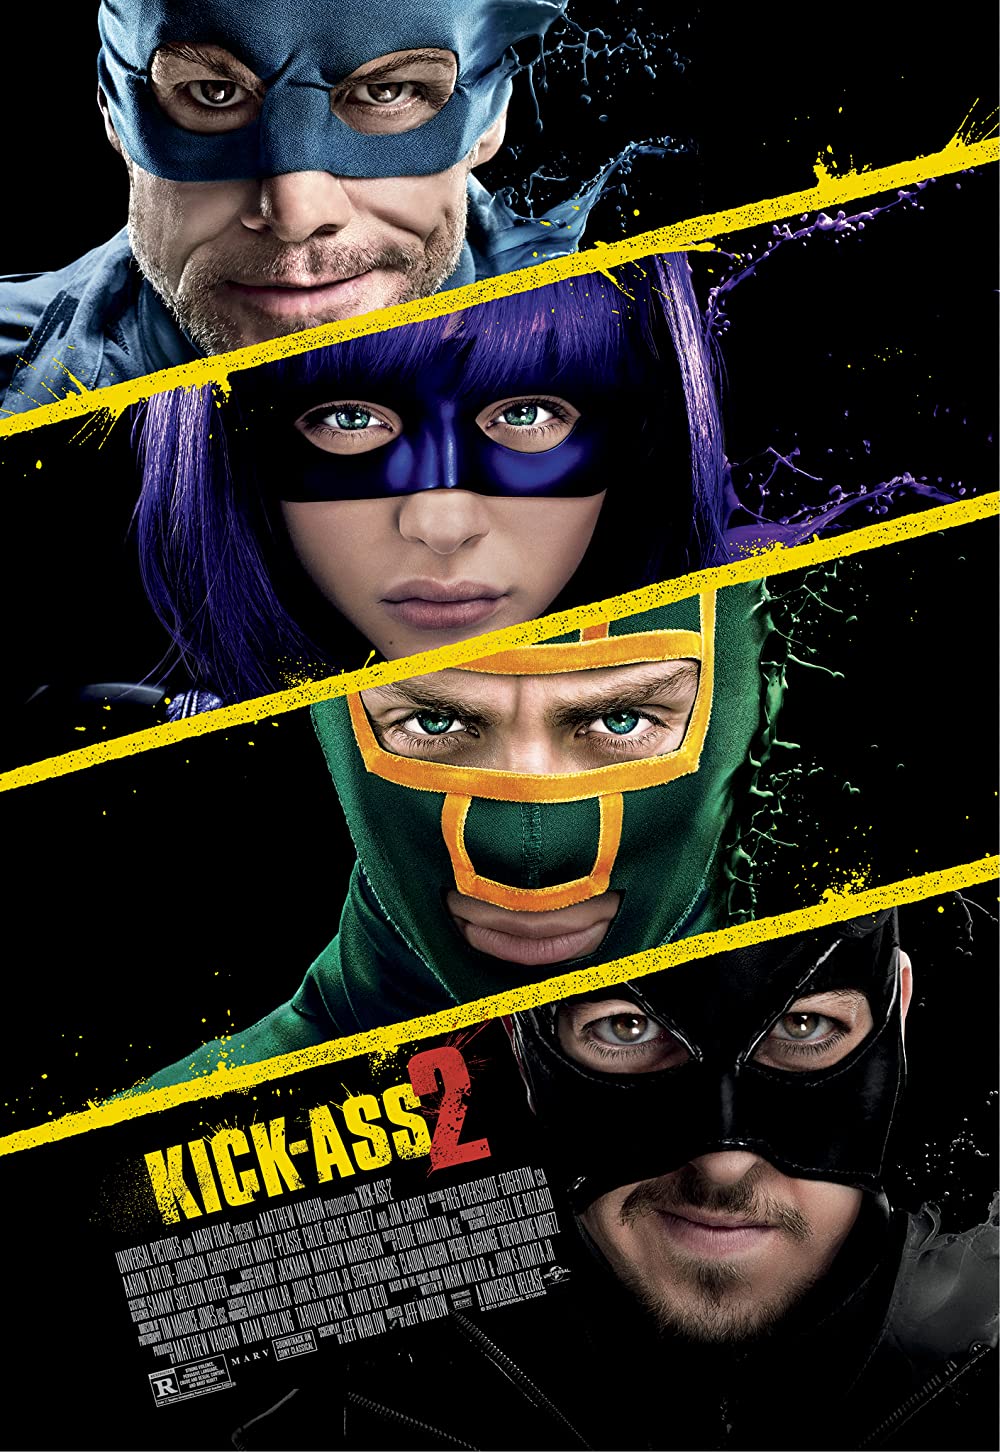 FULL MOVIE: Kick-Ass 2 (2013) [Action]